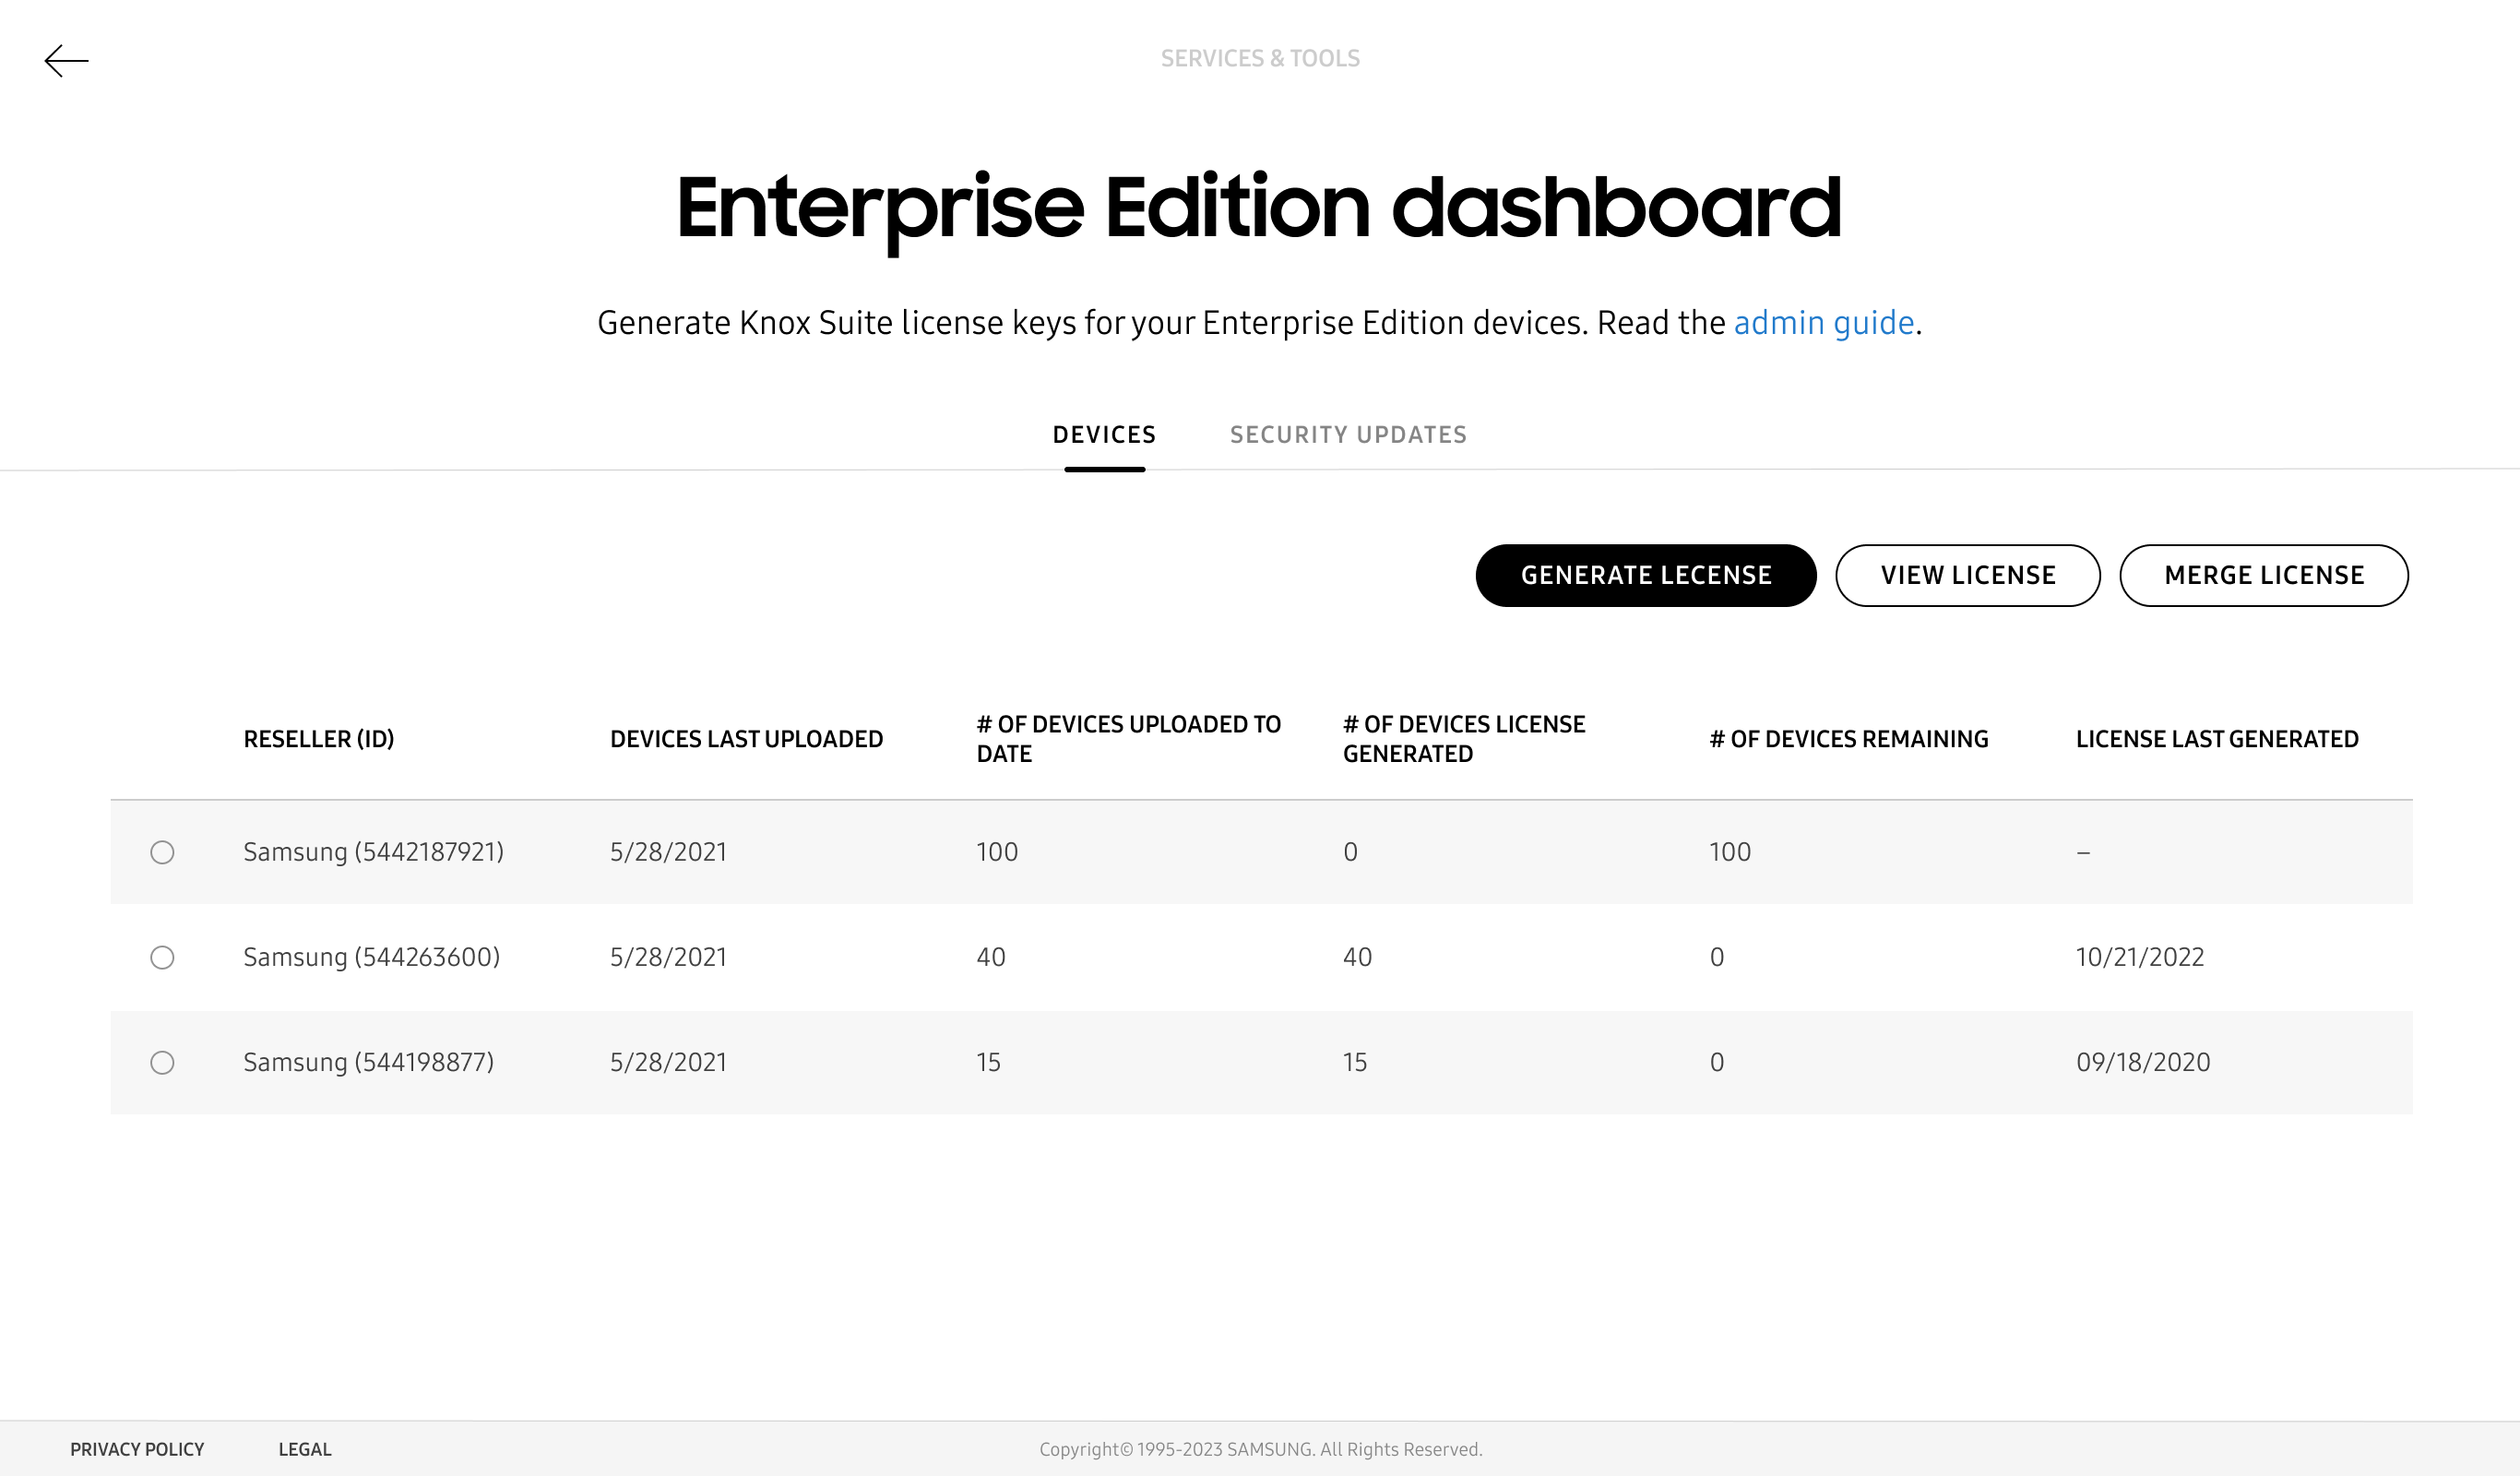 The enterprise edition dashboard